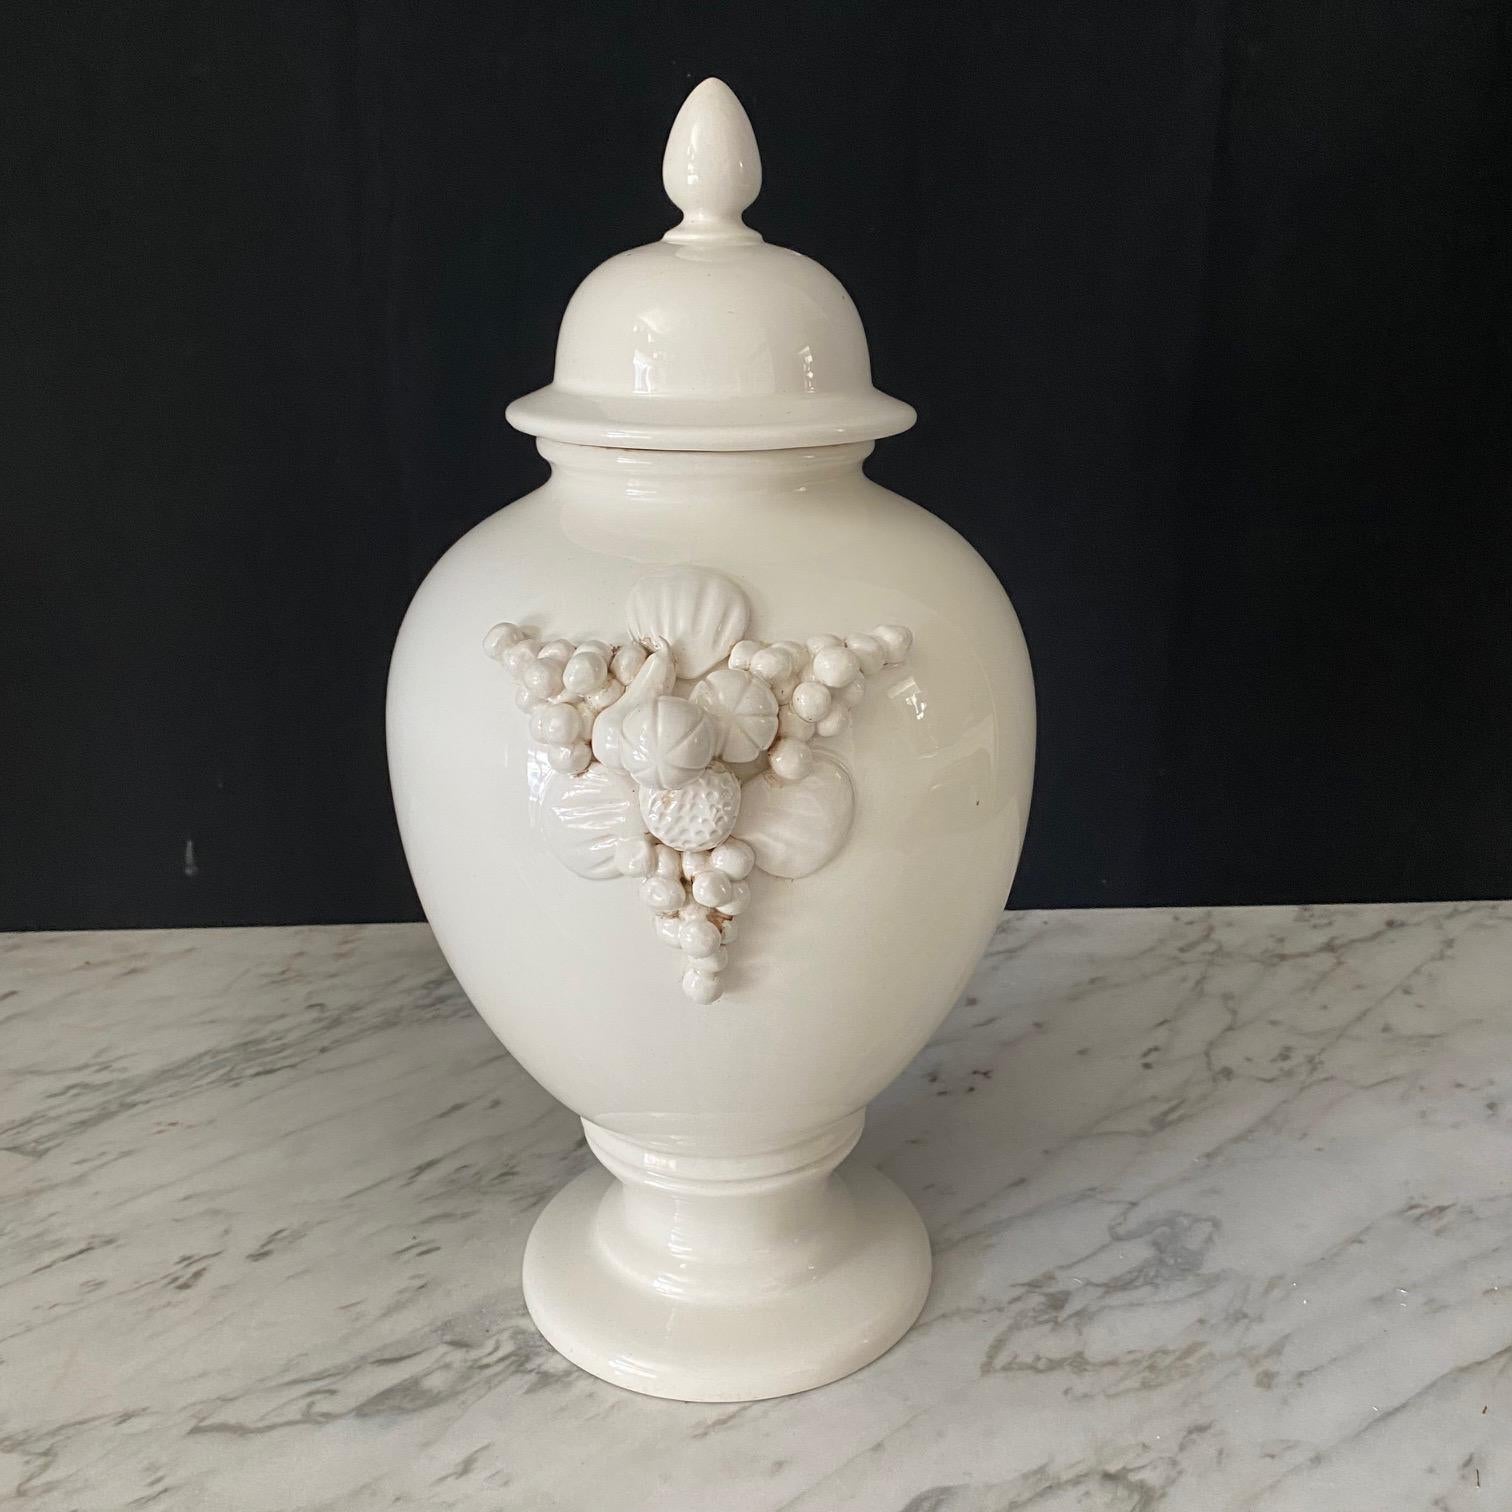  Large Antique Italian Pair of White Ceramic Apothecary Style Urn Vases  5